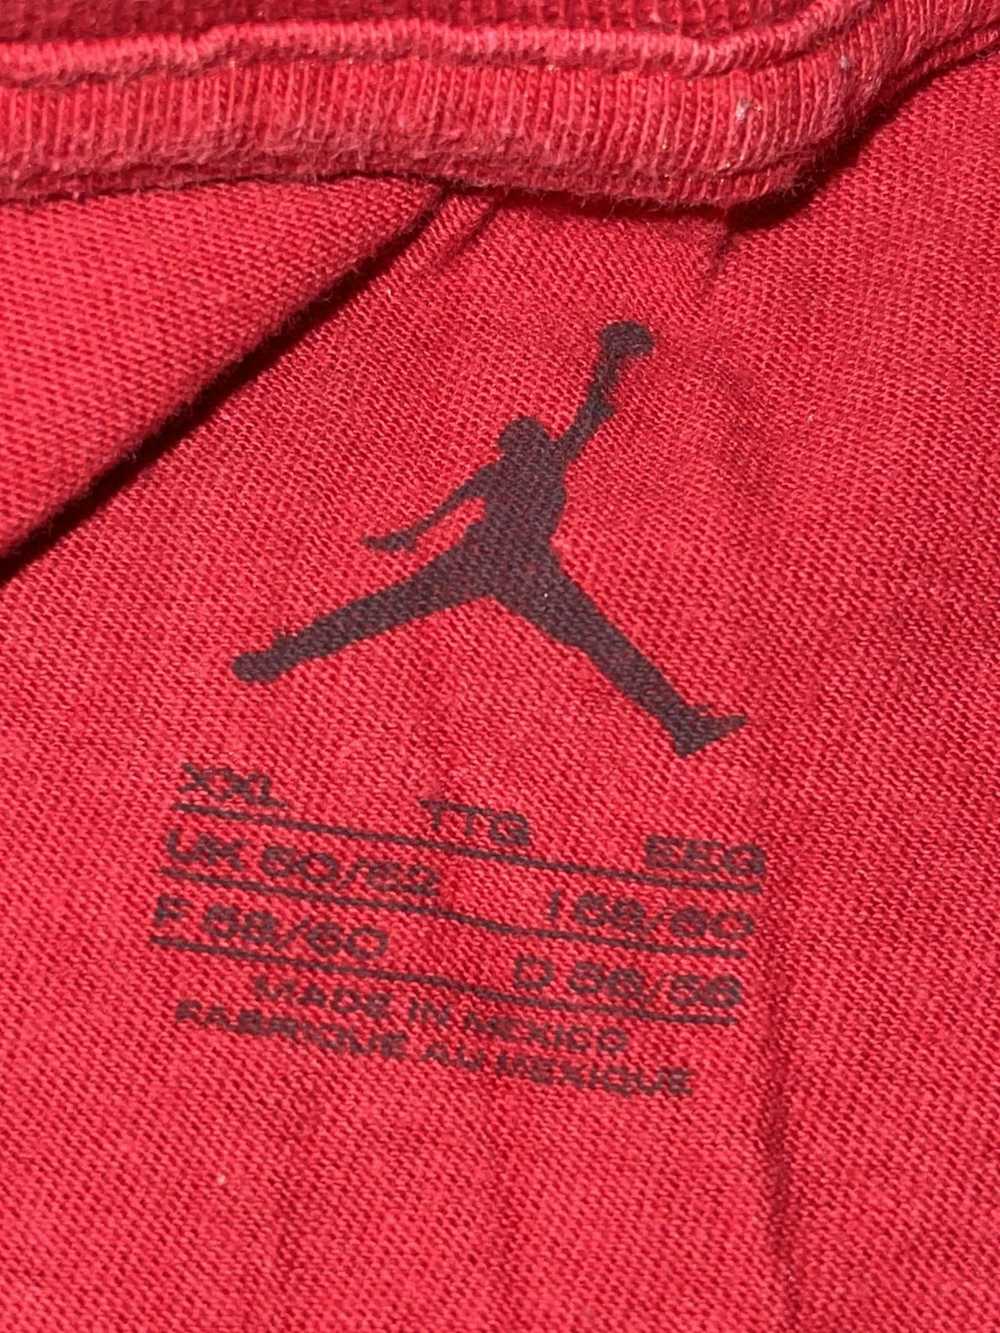 Nike Vintage MJ Shoe Collection - image 3